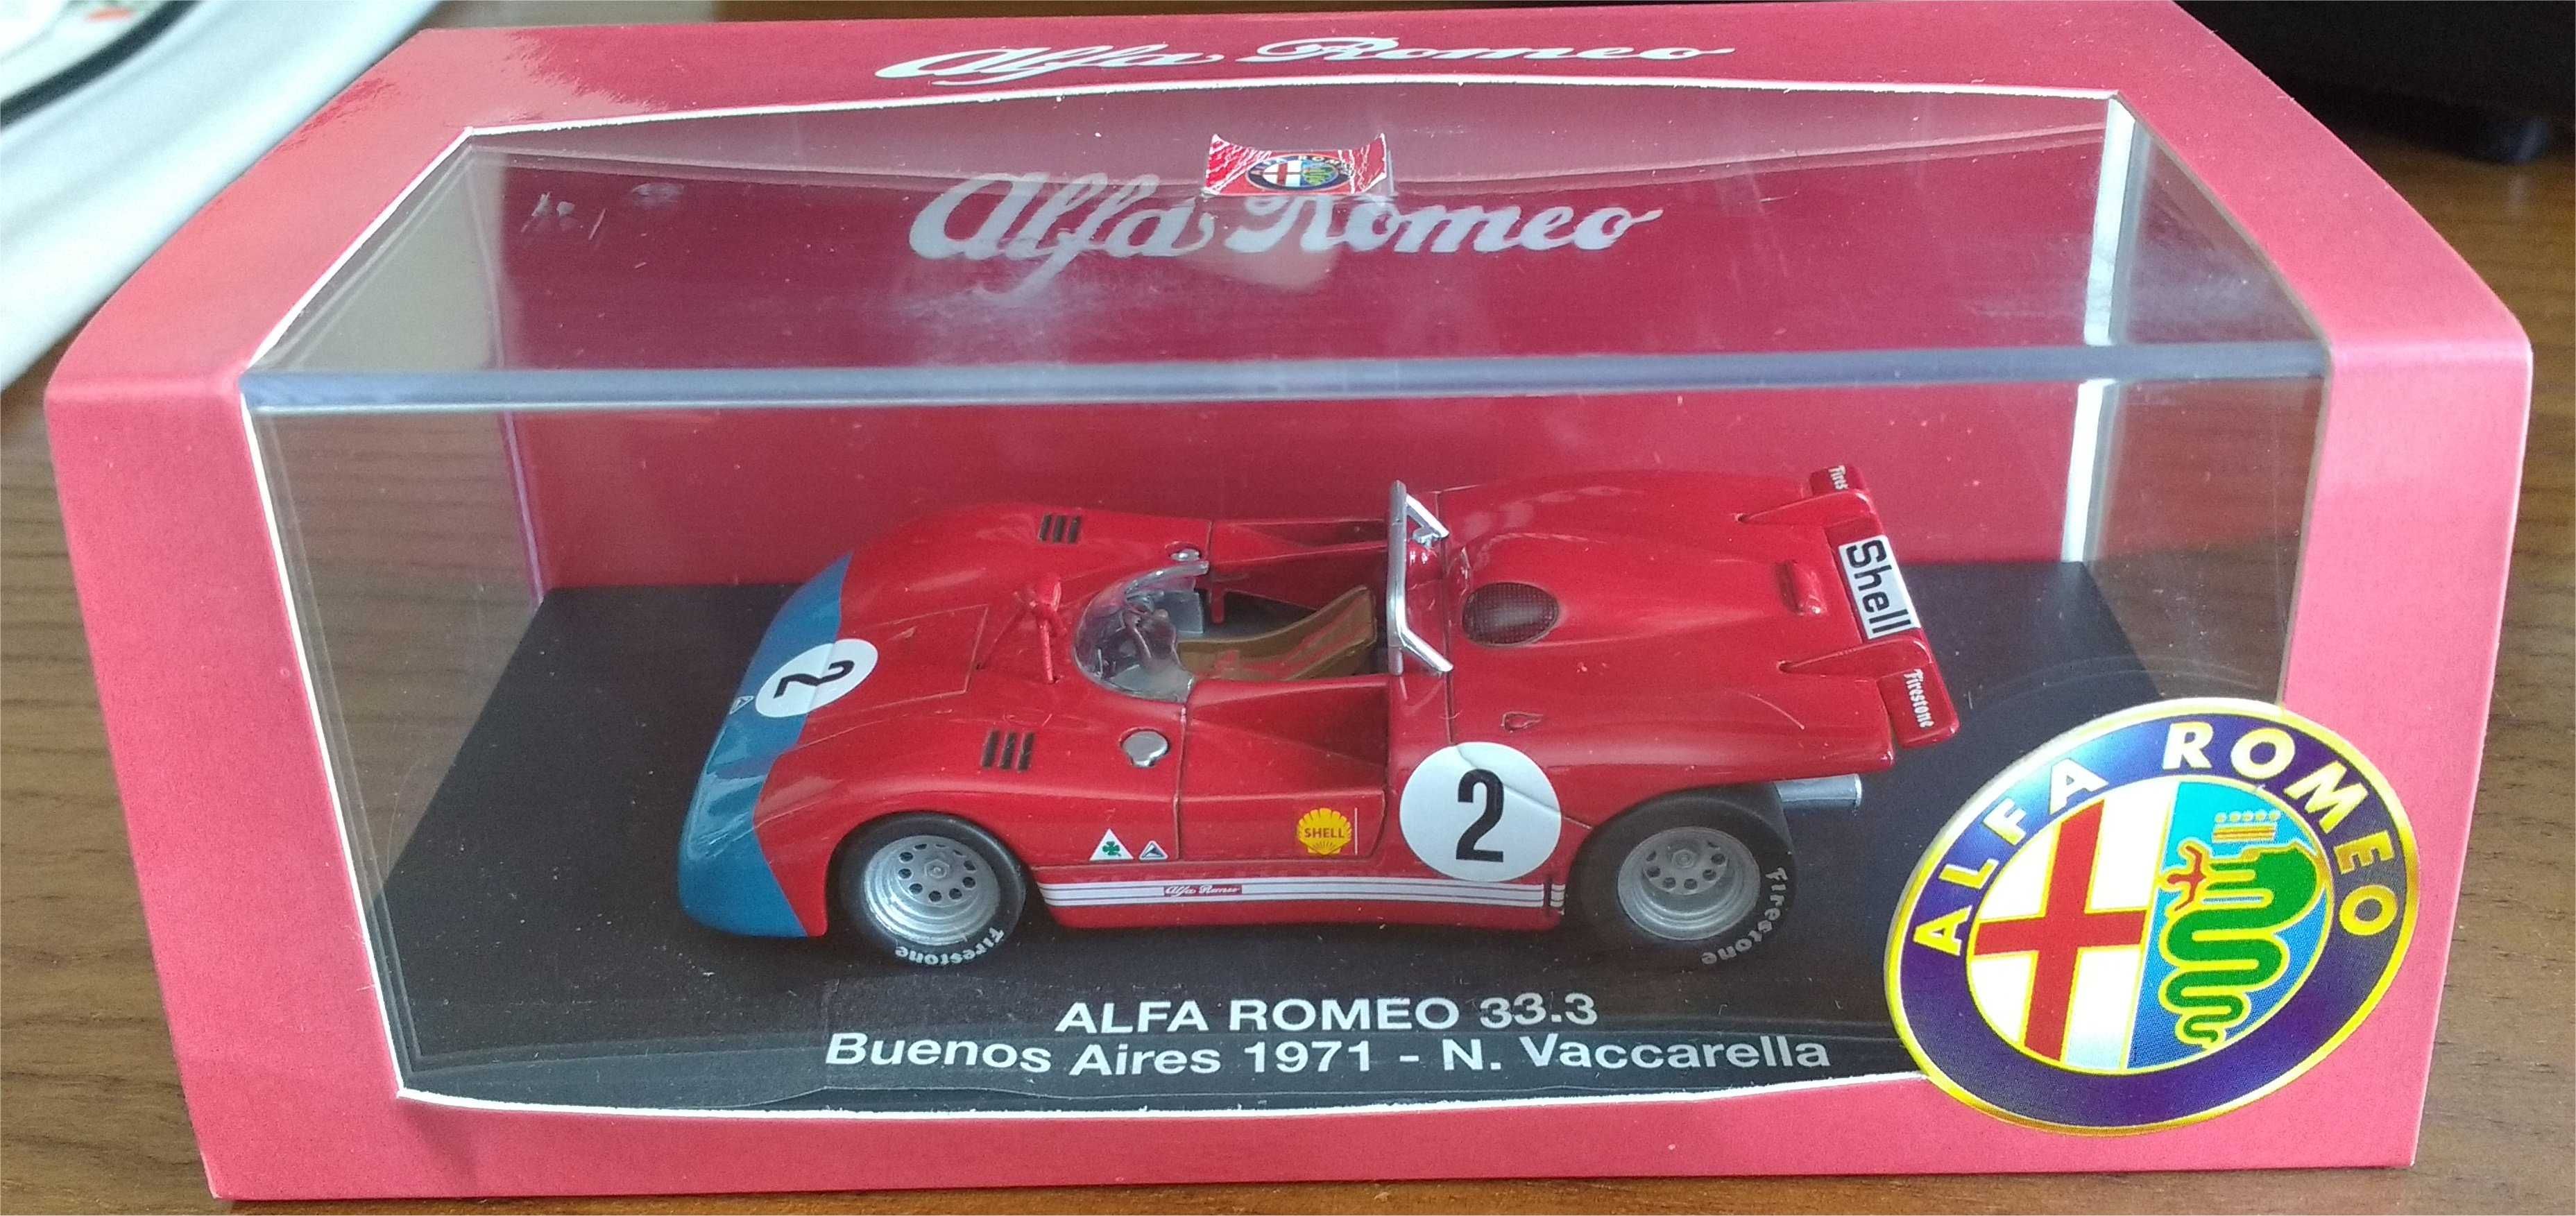 M4 - Alfa Romeo 33.3 - Buenos Aires 1971 - N. Vaccarella